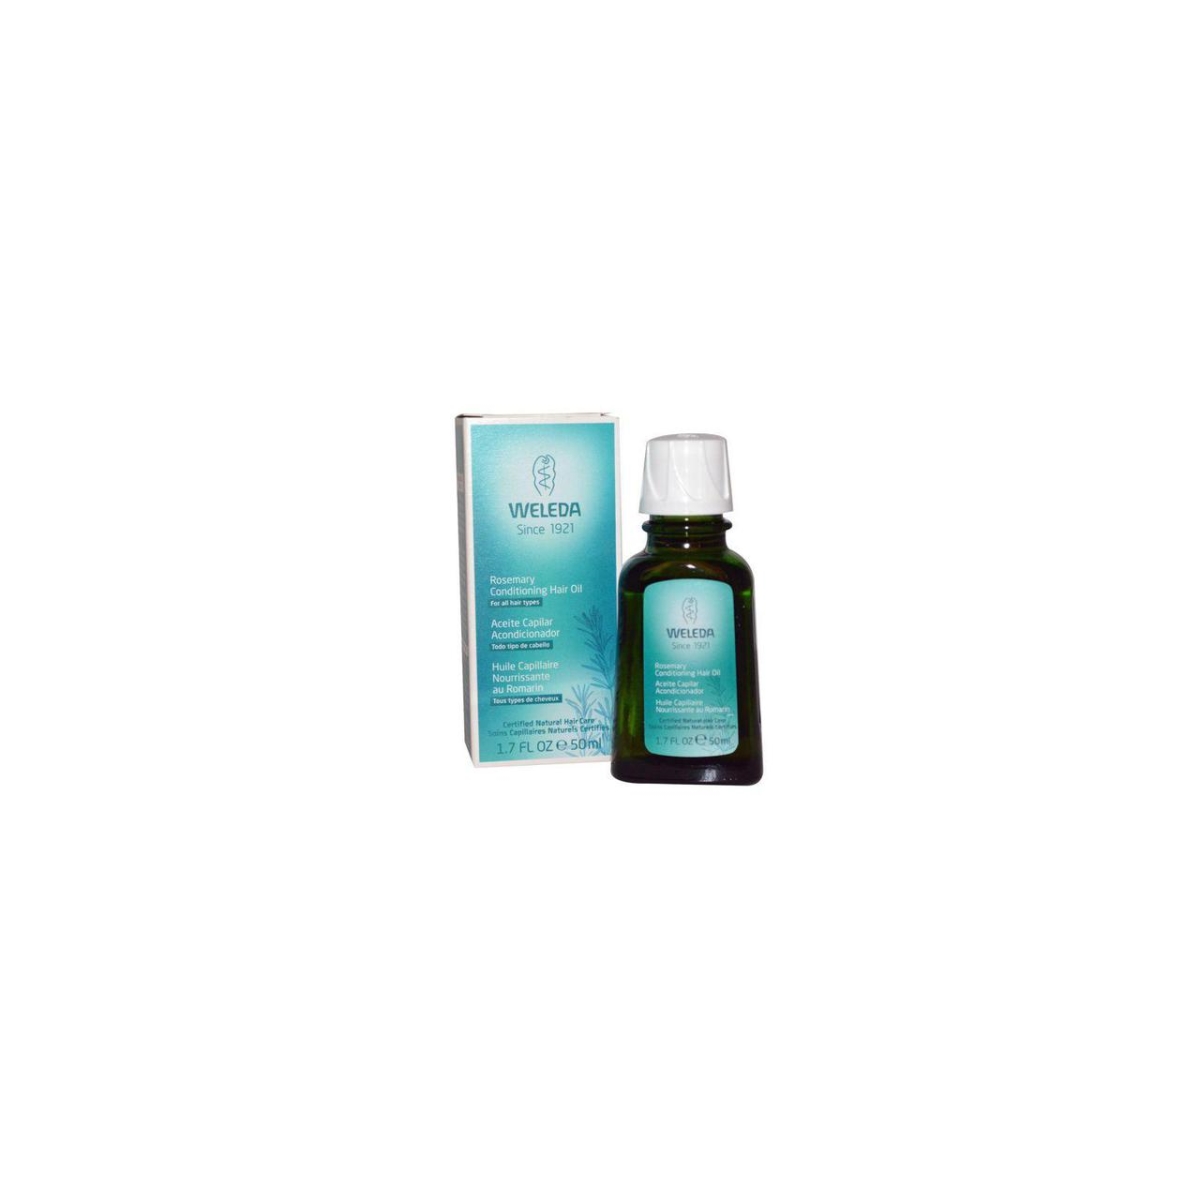 Hg1567148 1.7 Fl Oz Hair Oil Conditioning - Rosemary